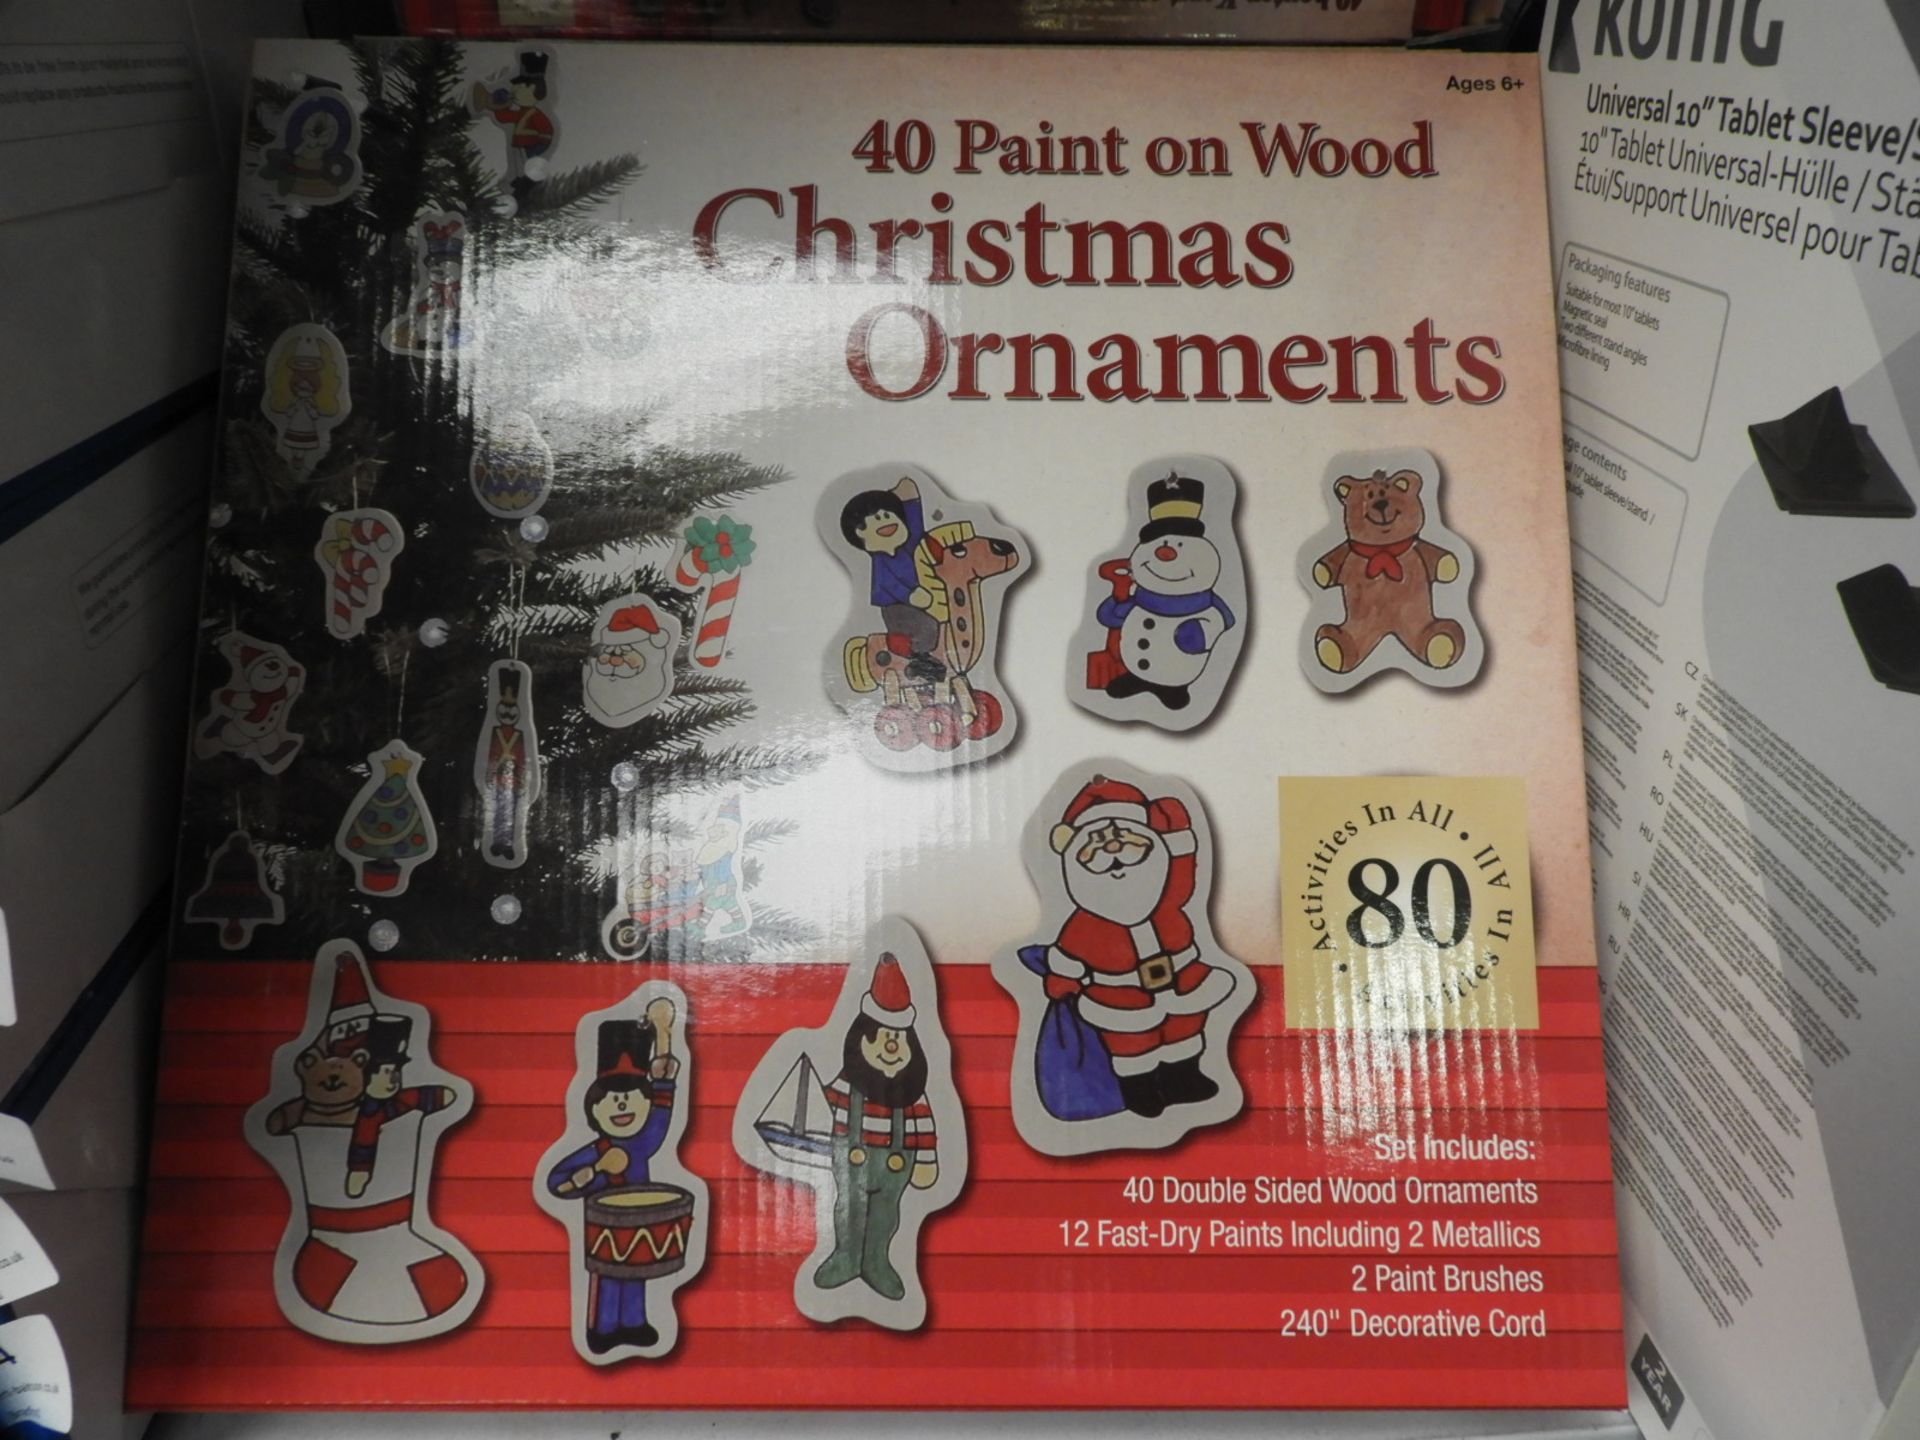 *Six Packs of 40 Paint on Wood Christmas Ornaments